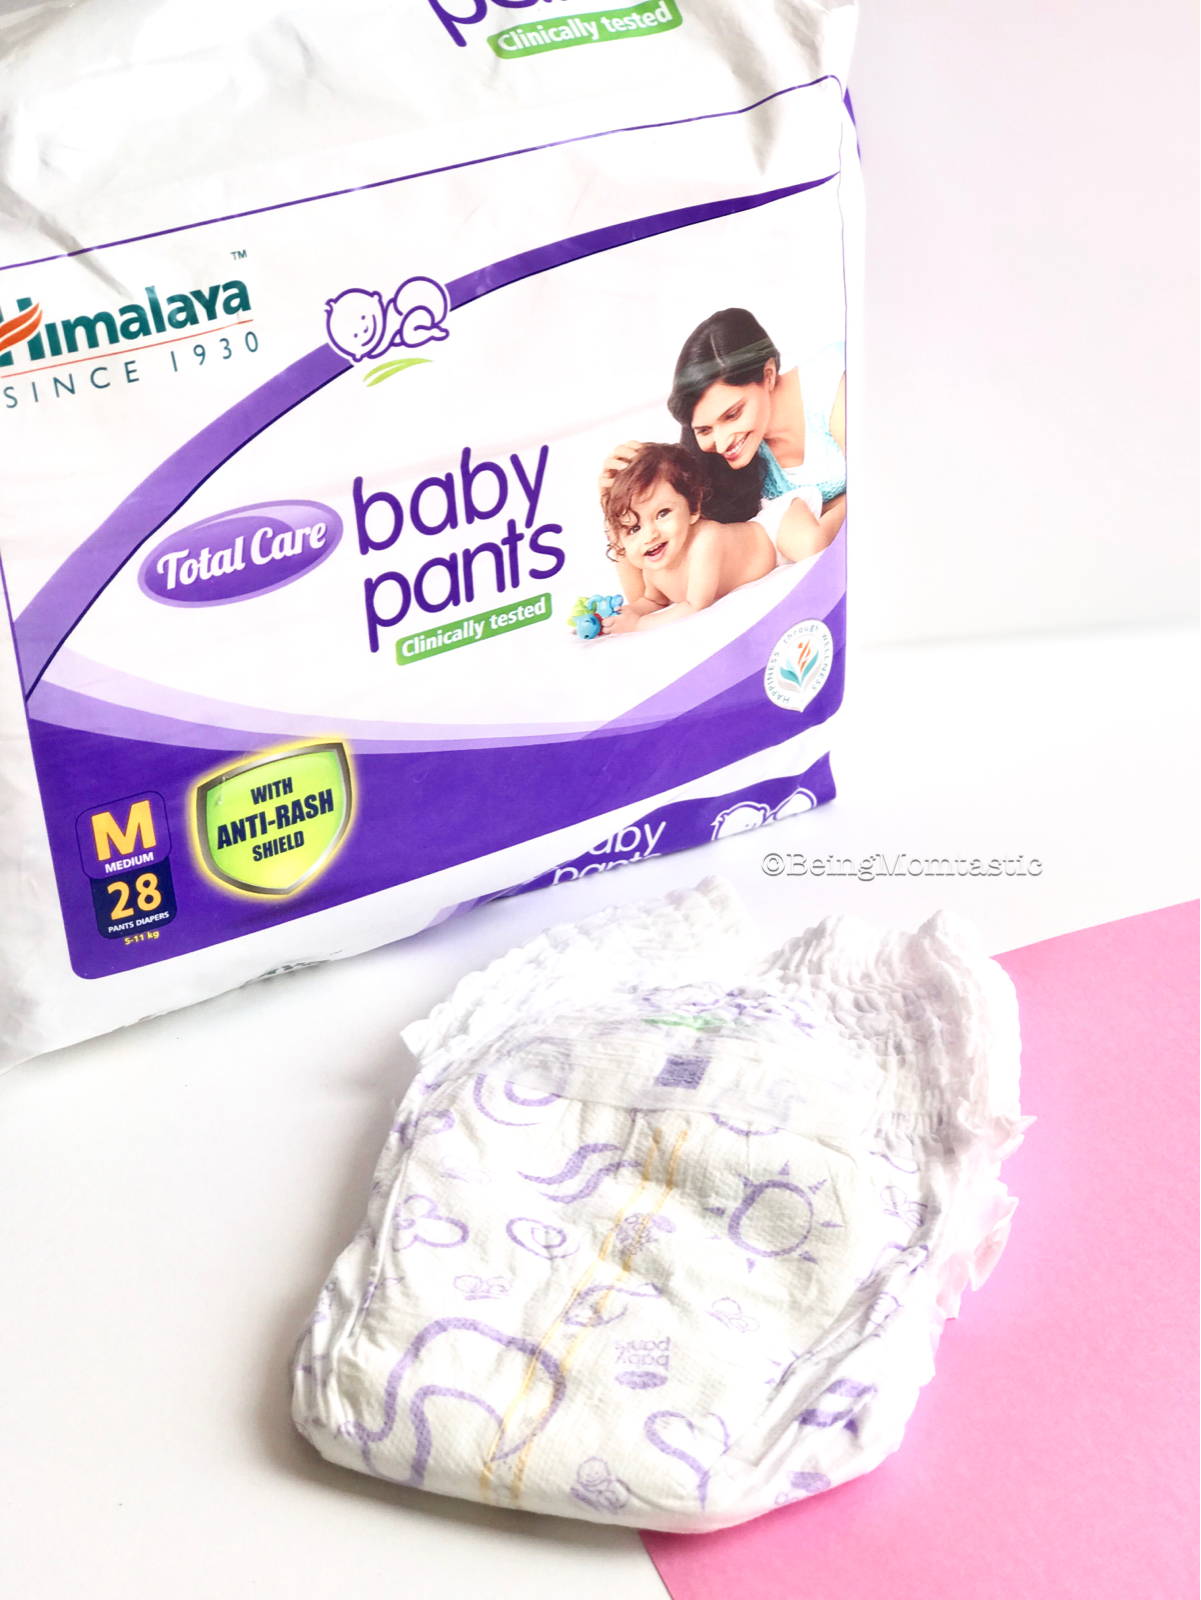 himalaya baby diapers